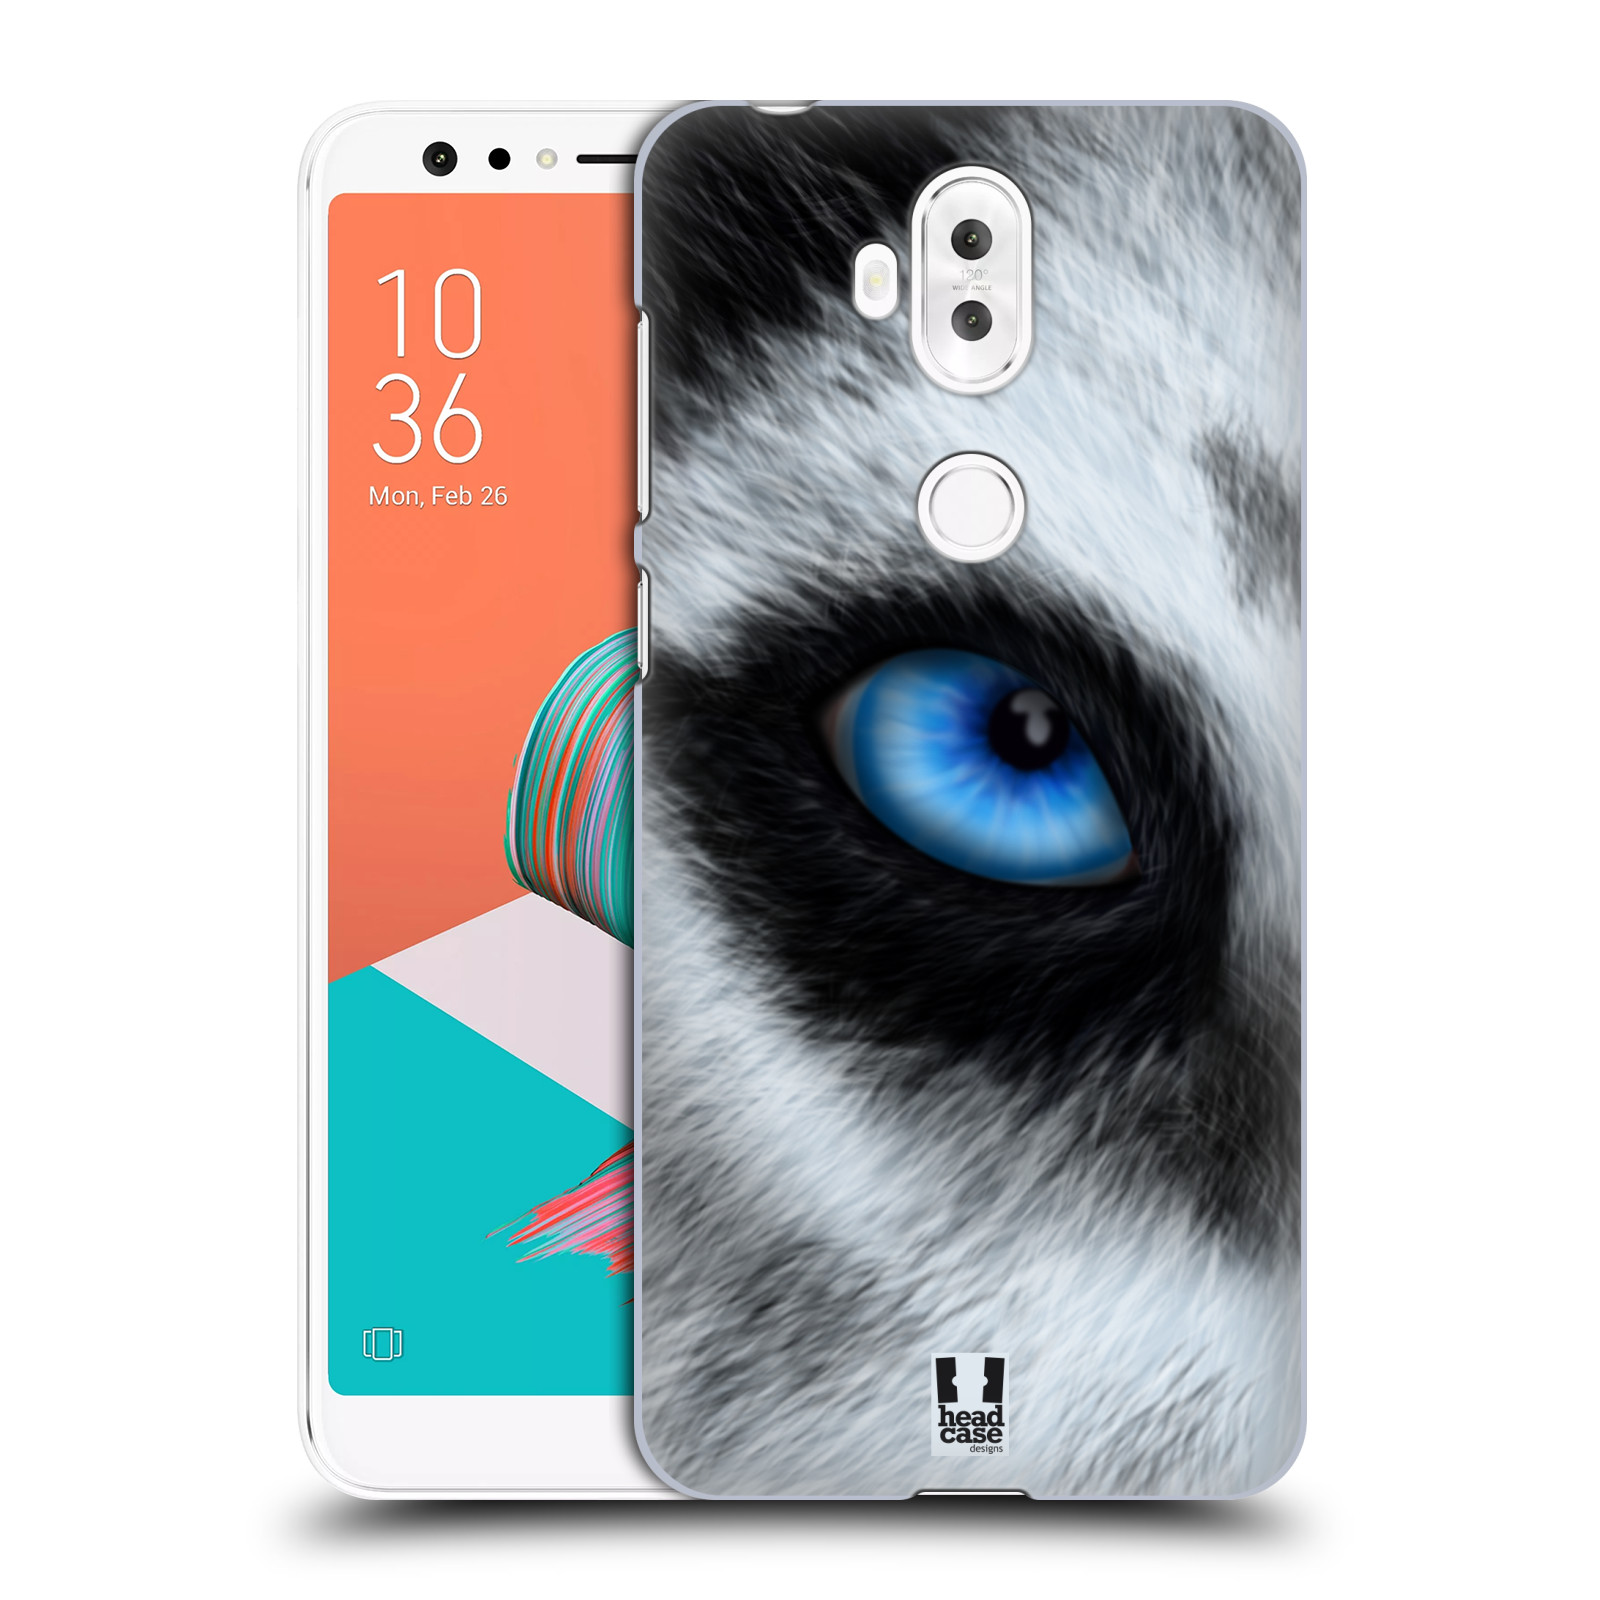 HEAD CASE plastový obal na mobil Asus Zenfone 5 LITE ZC600KL vzor pohled zvířete oko pes husky